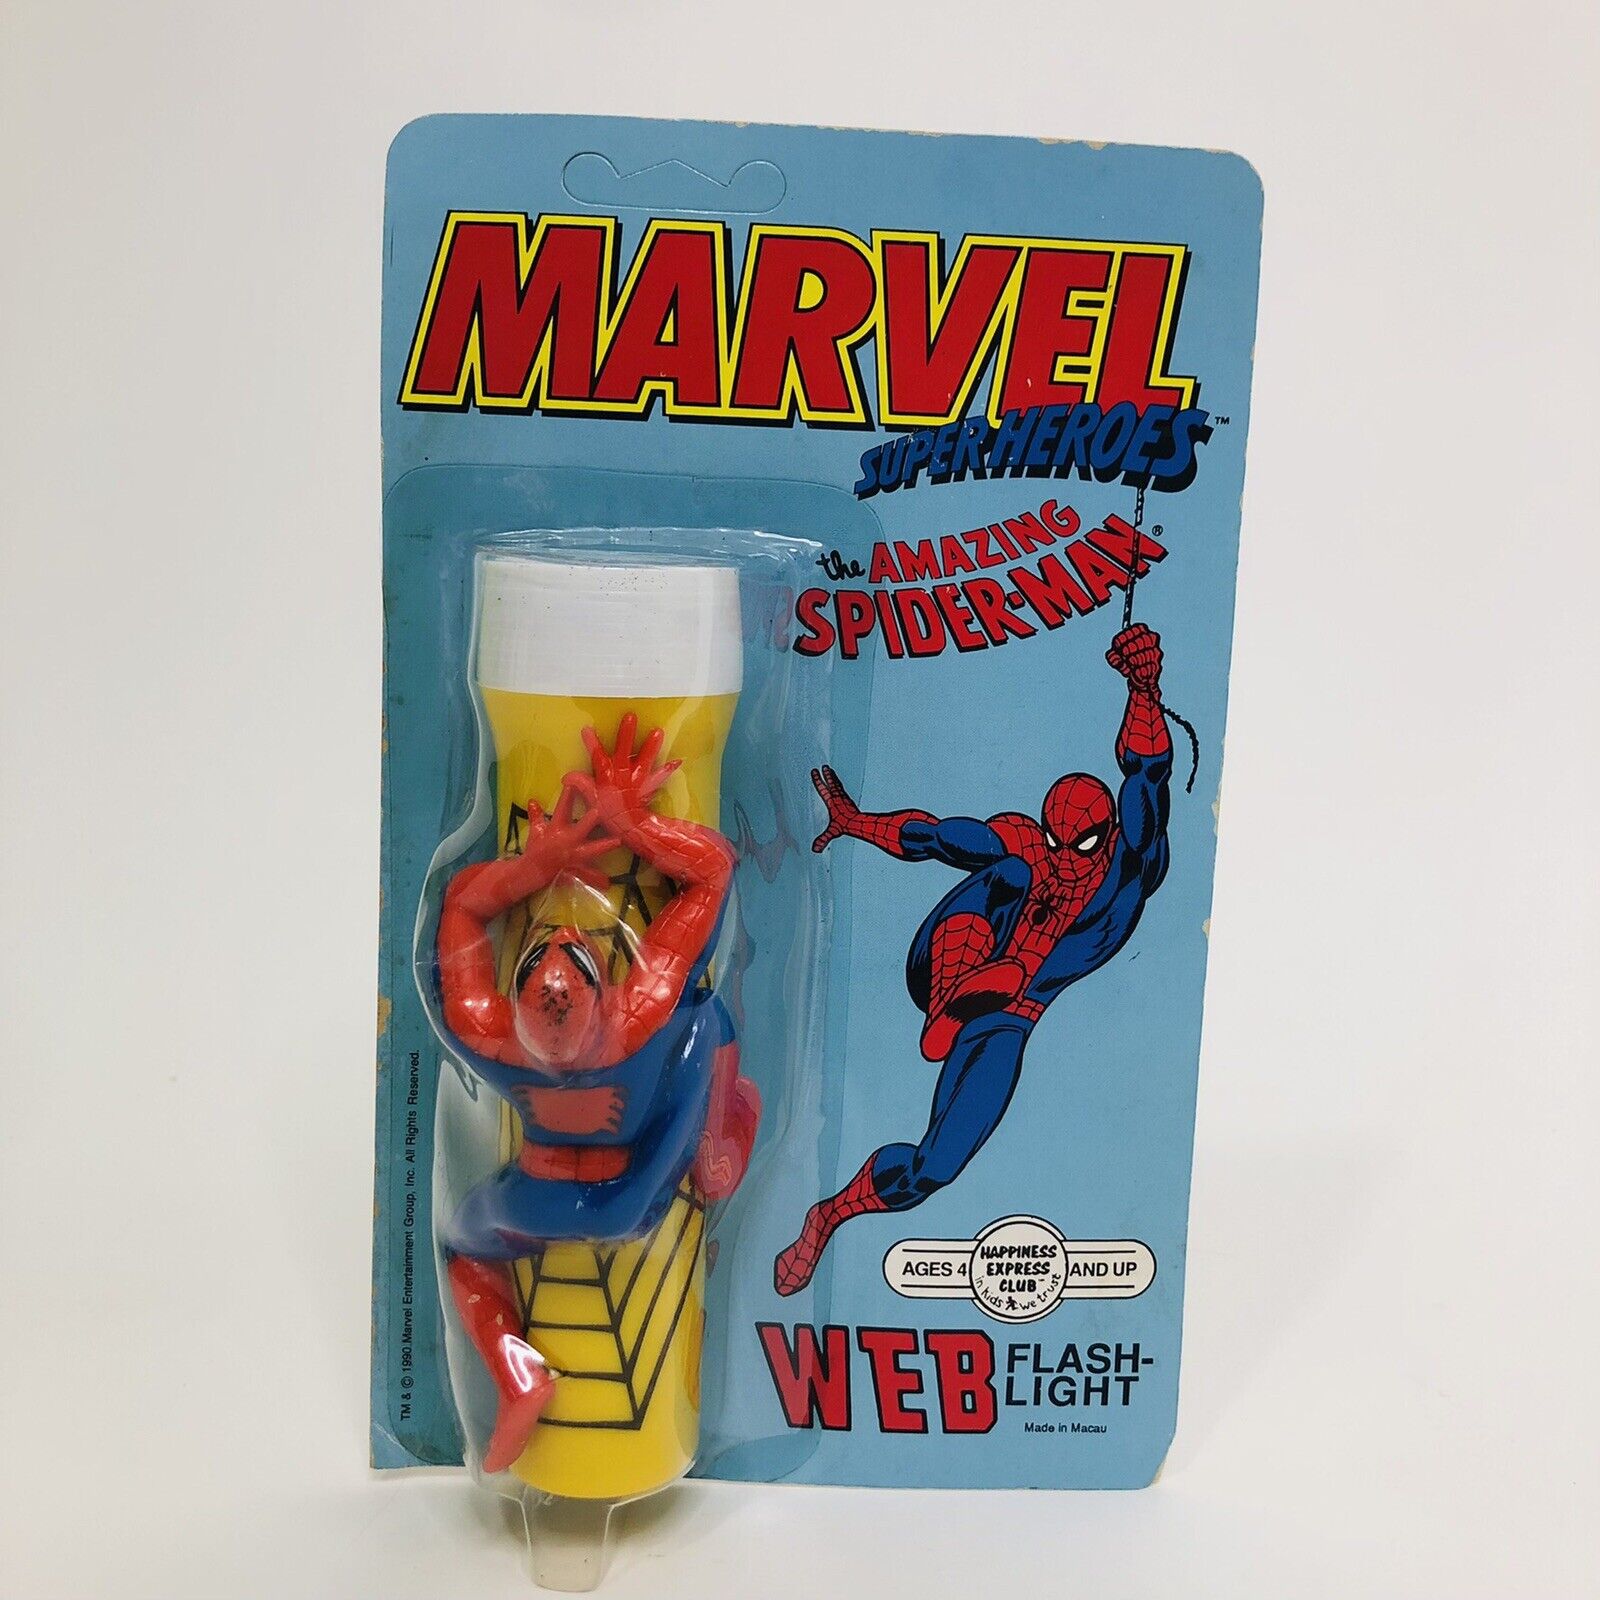 Vintage Marvel Superheros The Amazing Spider-Man Unpunched Web Flash Light New